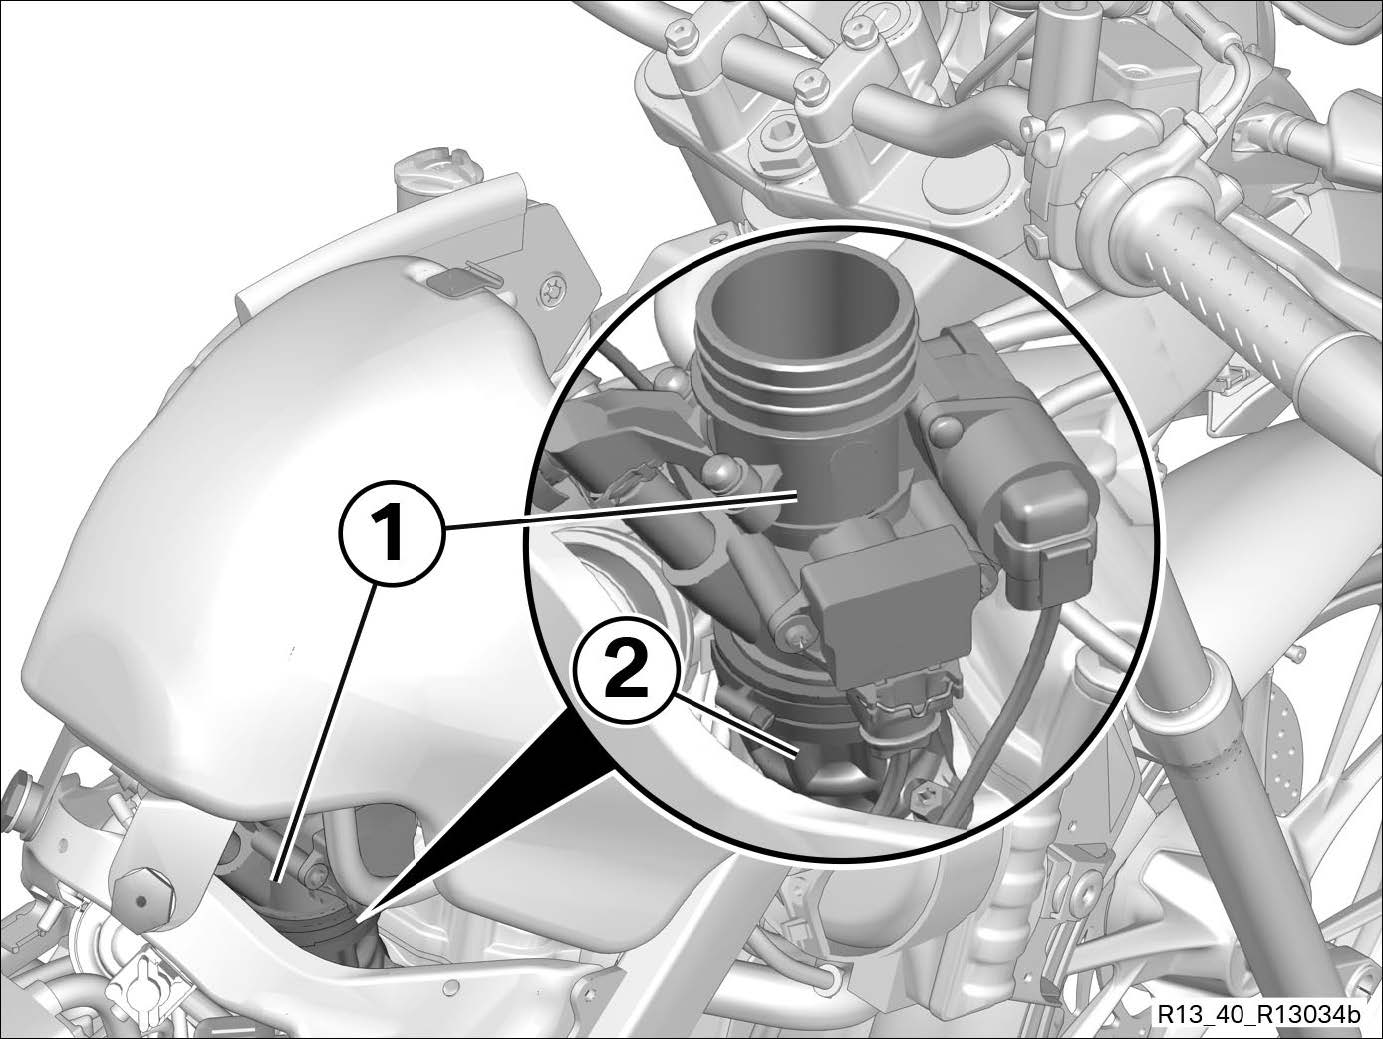 throttle valve (1) and intake manifold (2)